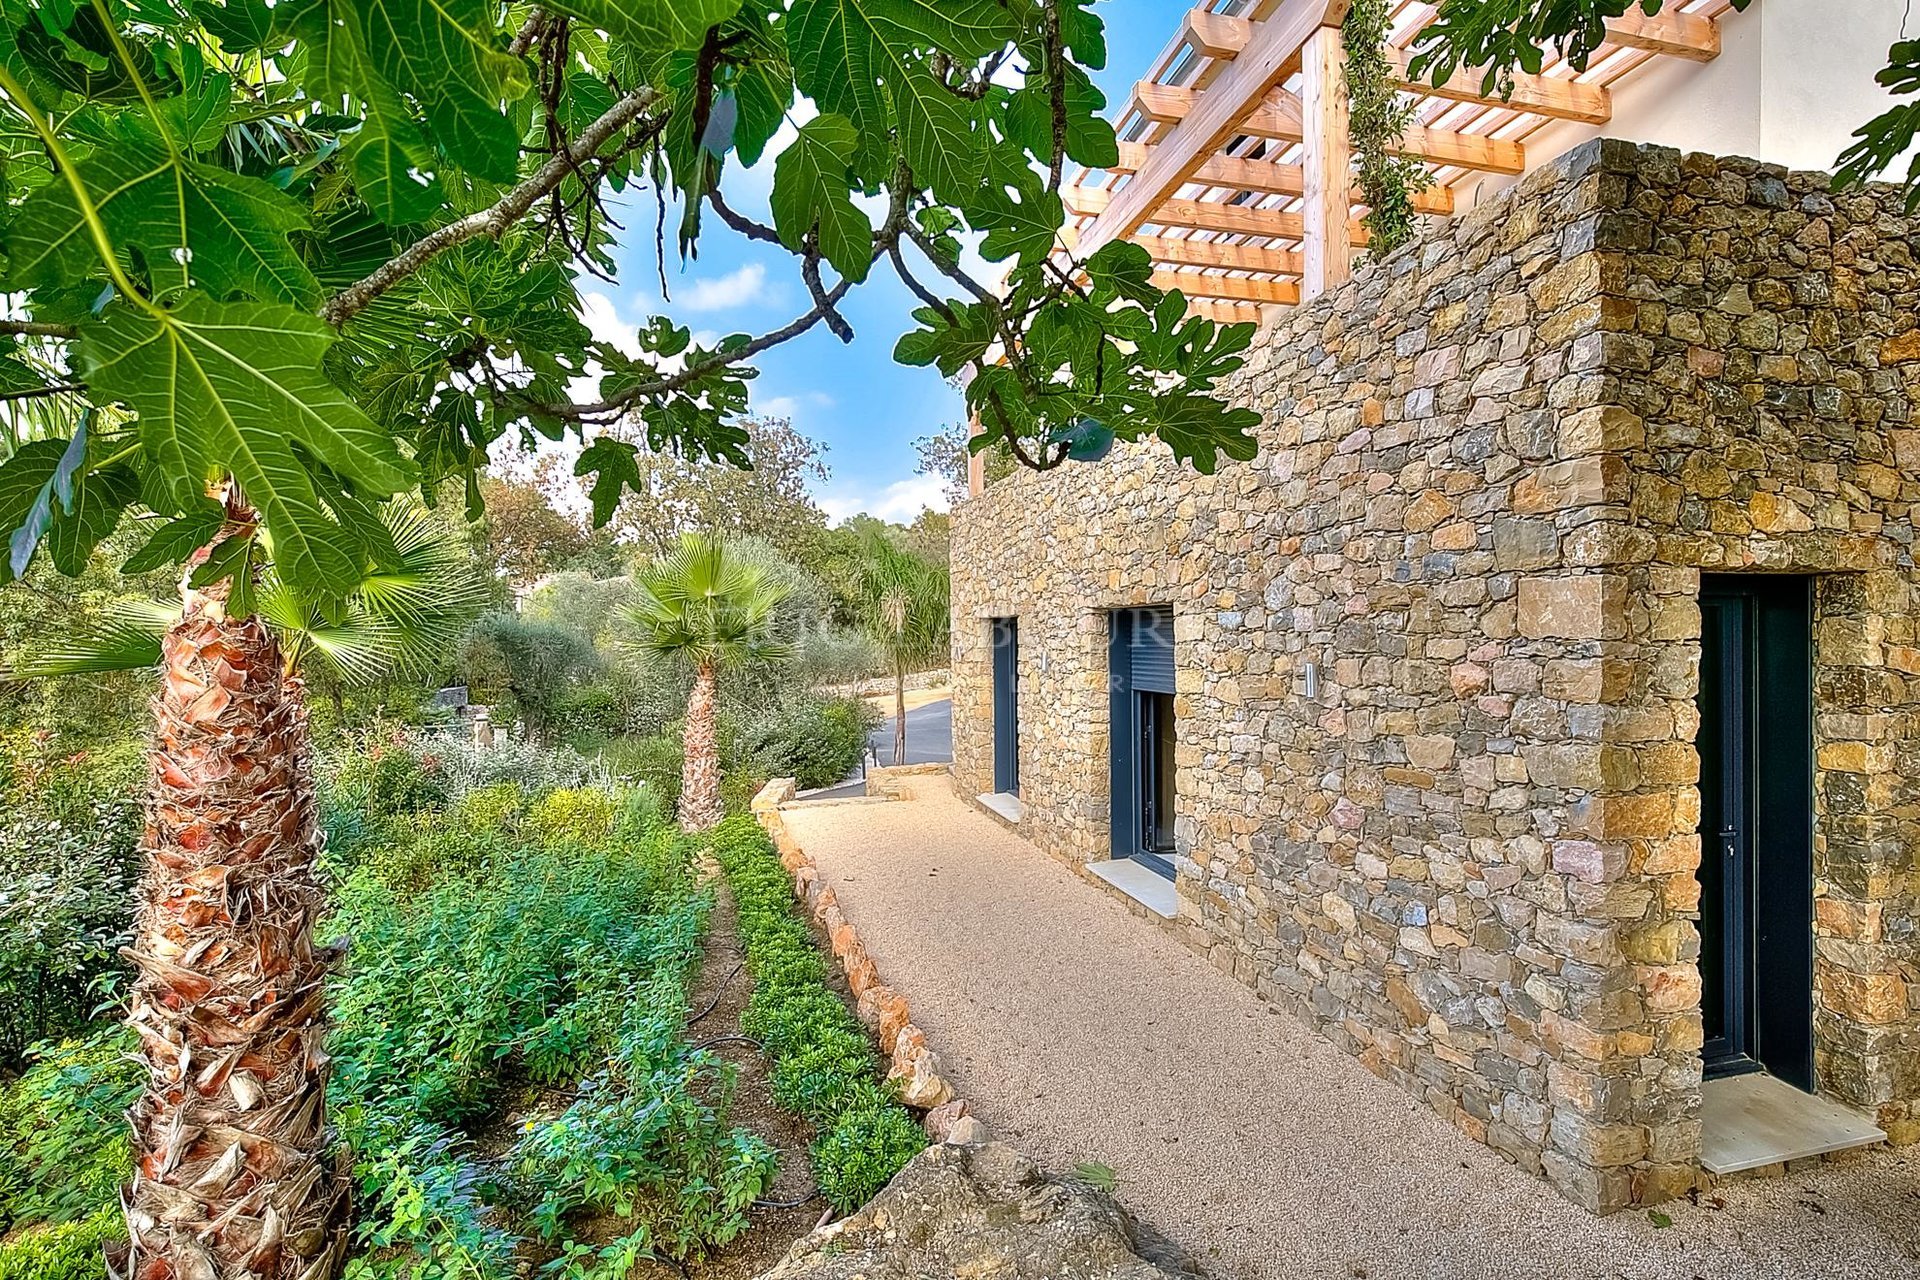 Charming provencal villa enjoying sumptuous view on the village